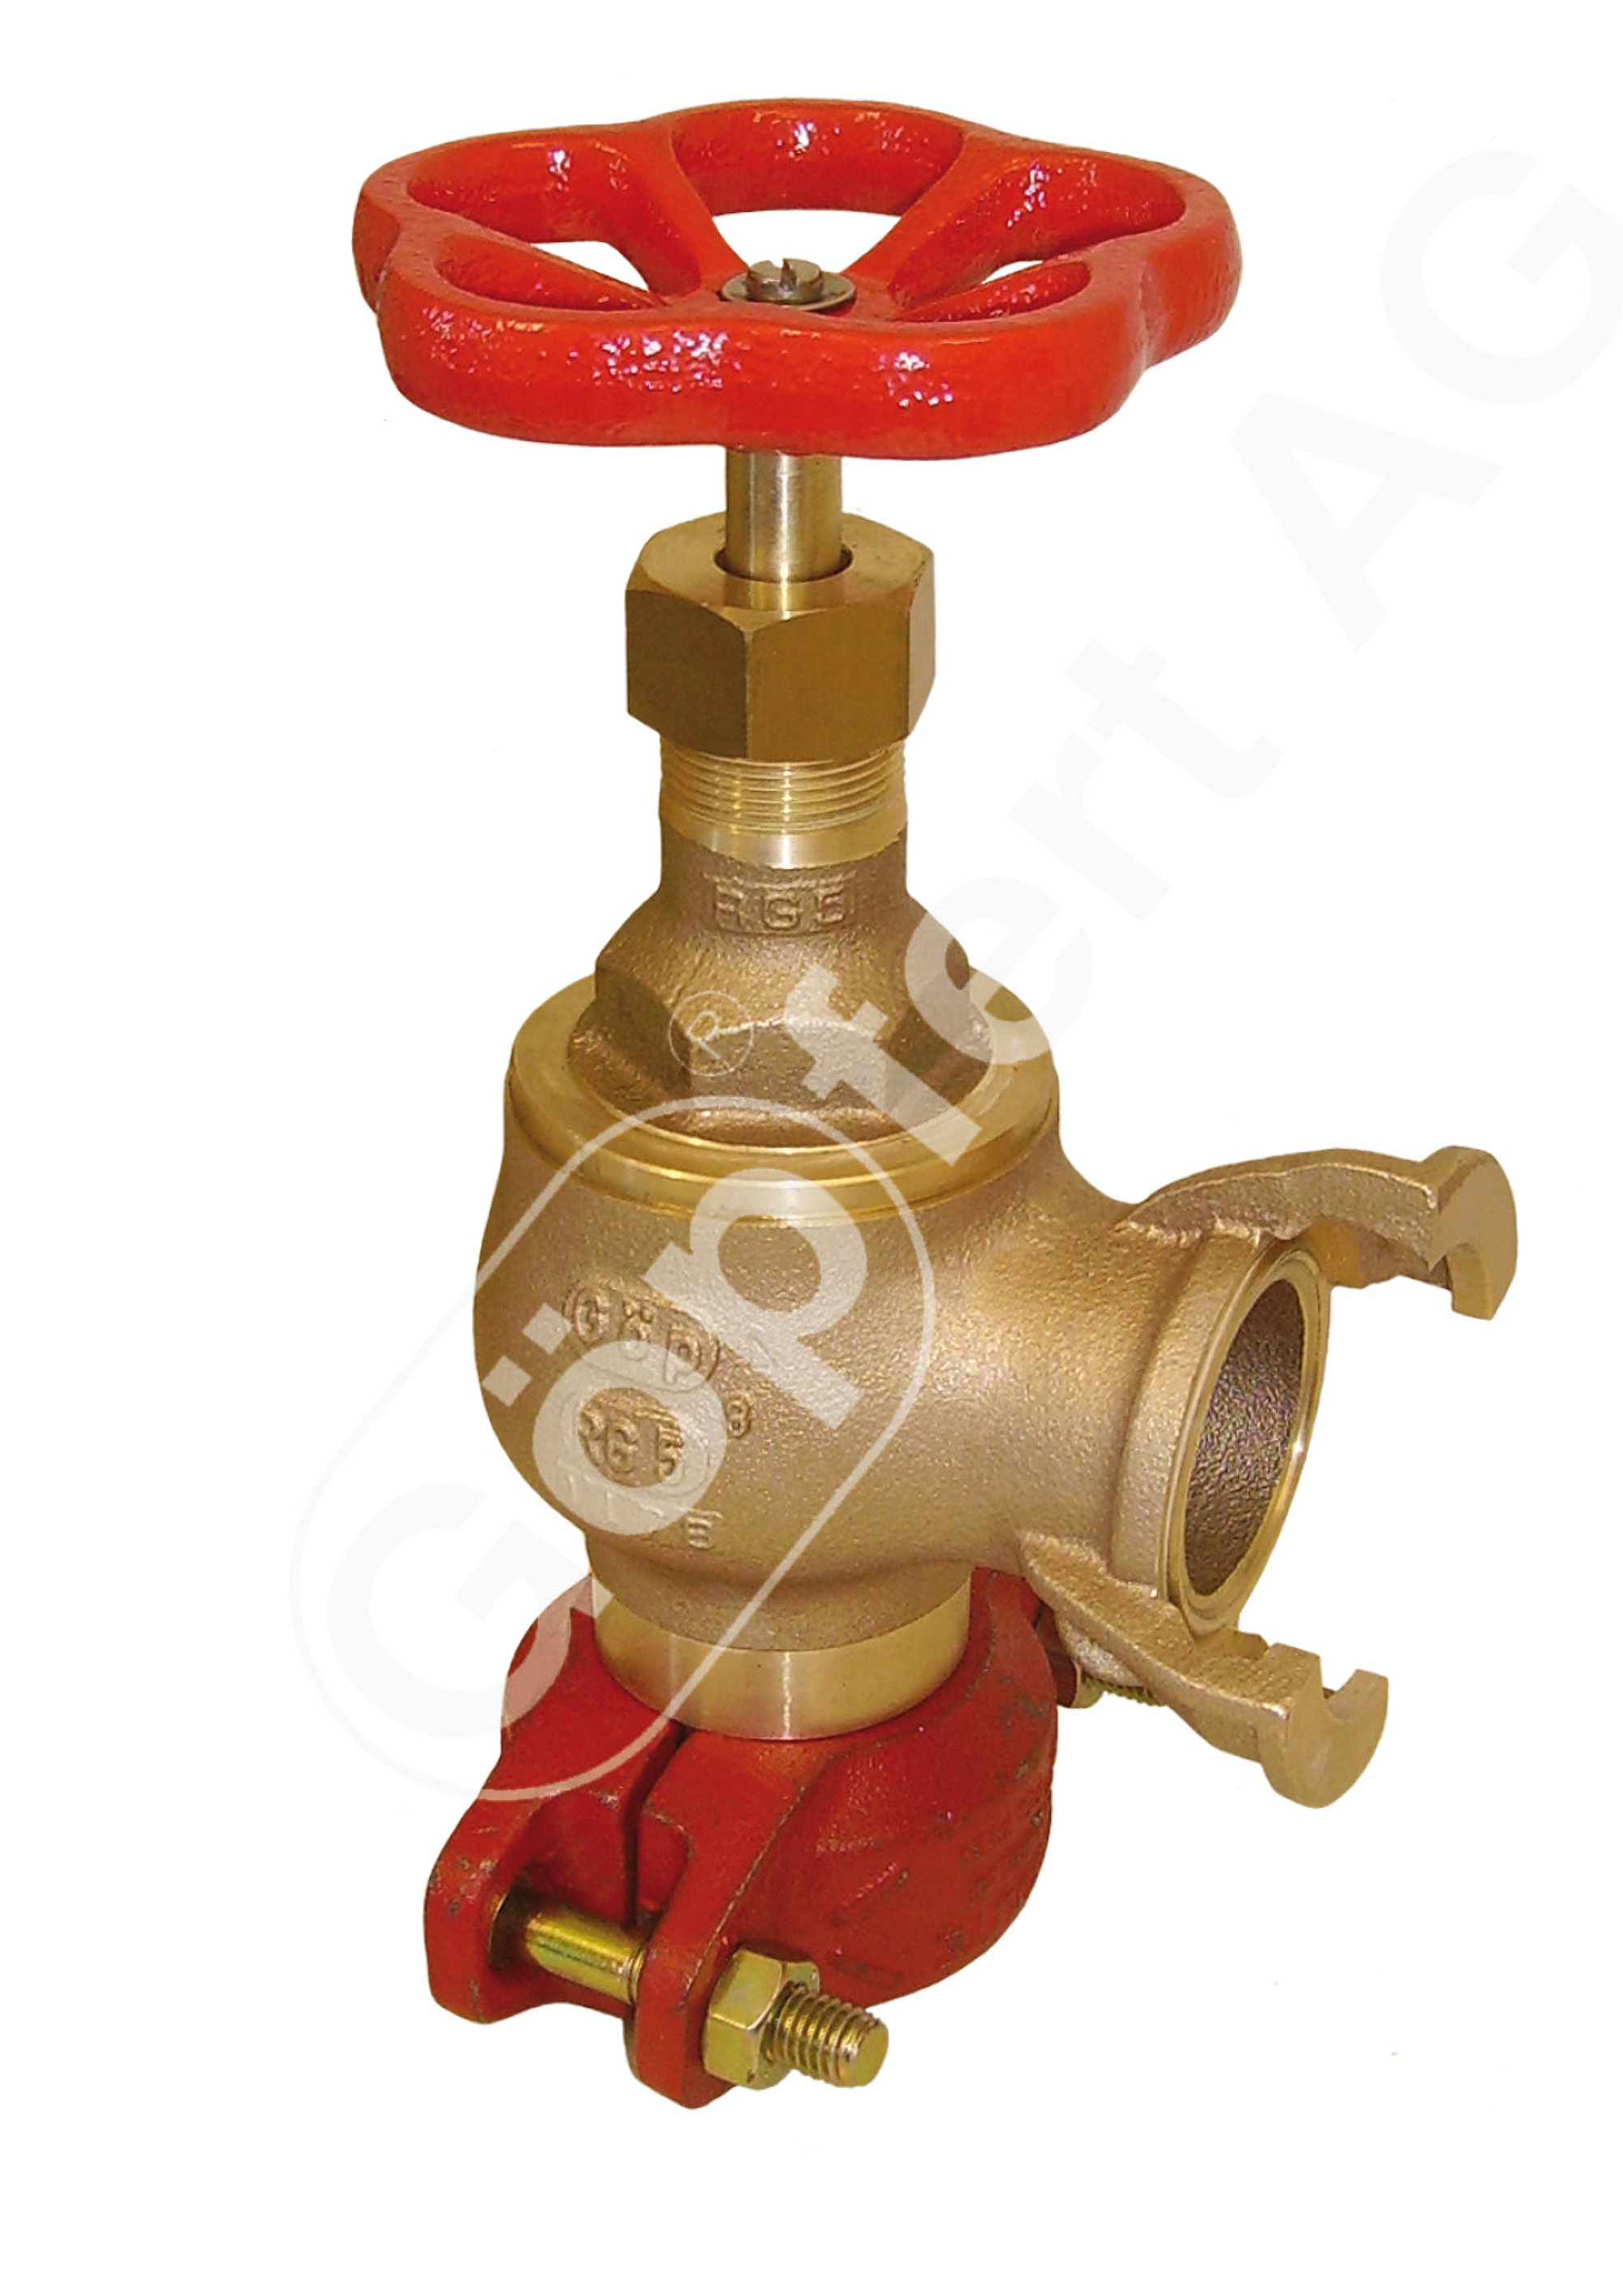 Rapidrop British Manufacturer & Supplier of Fire Sprinklers & Fire